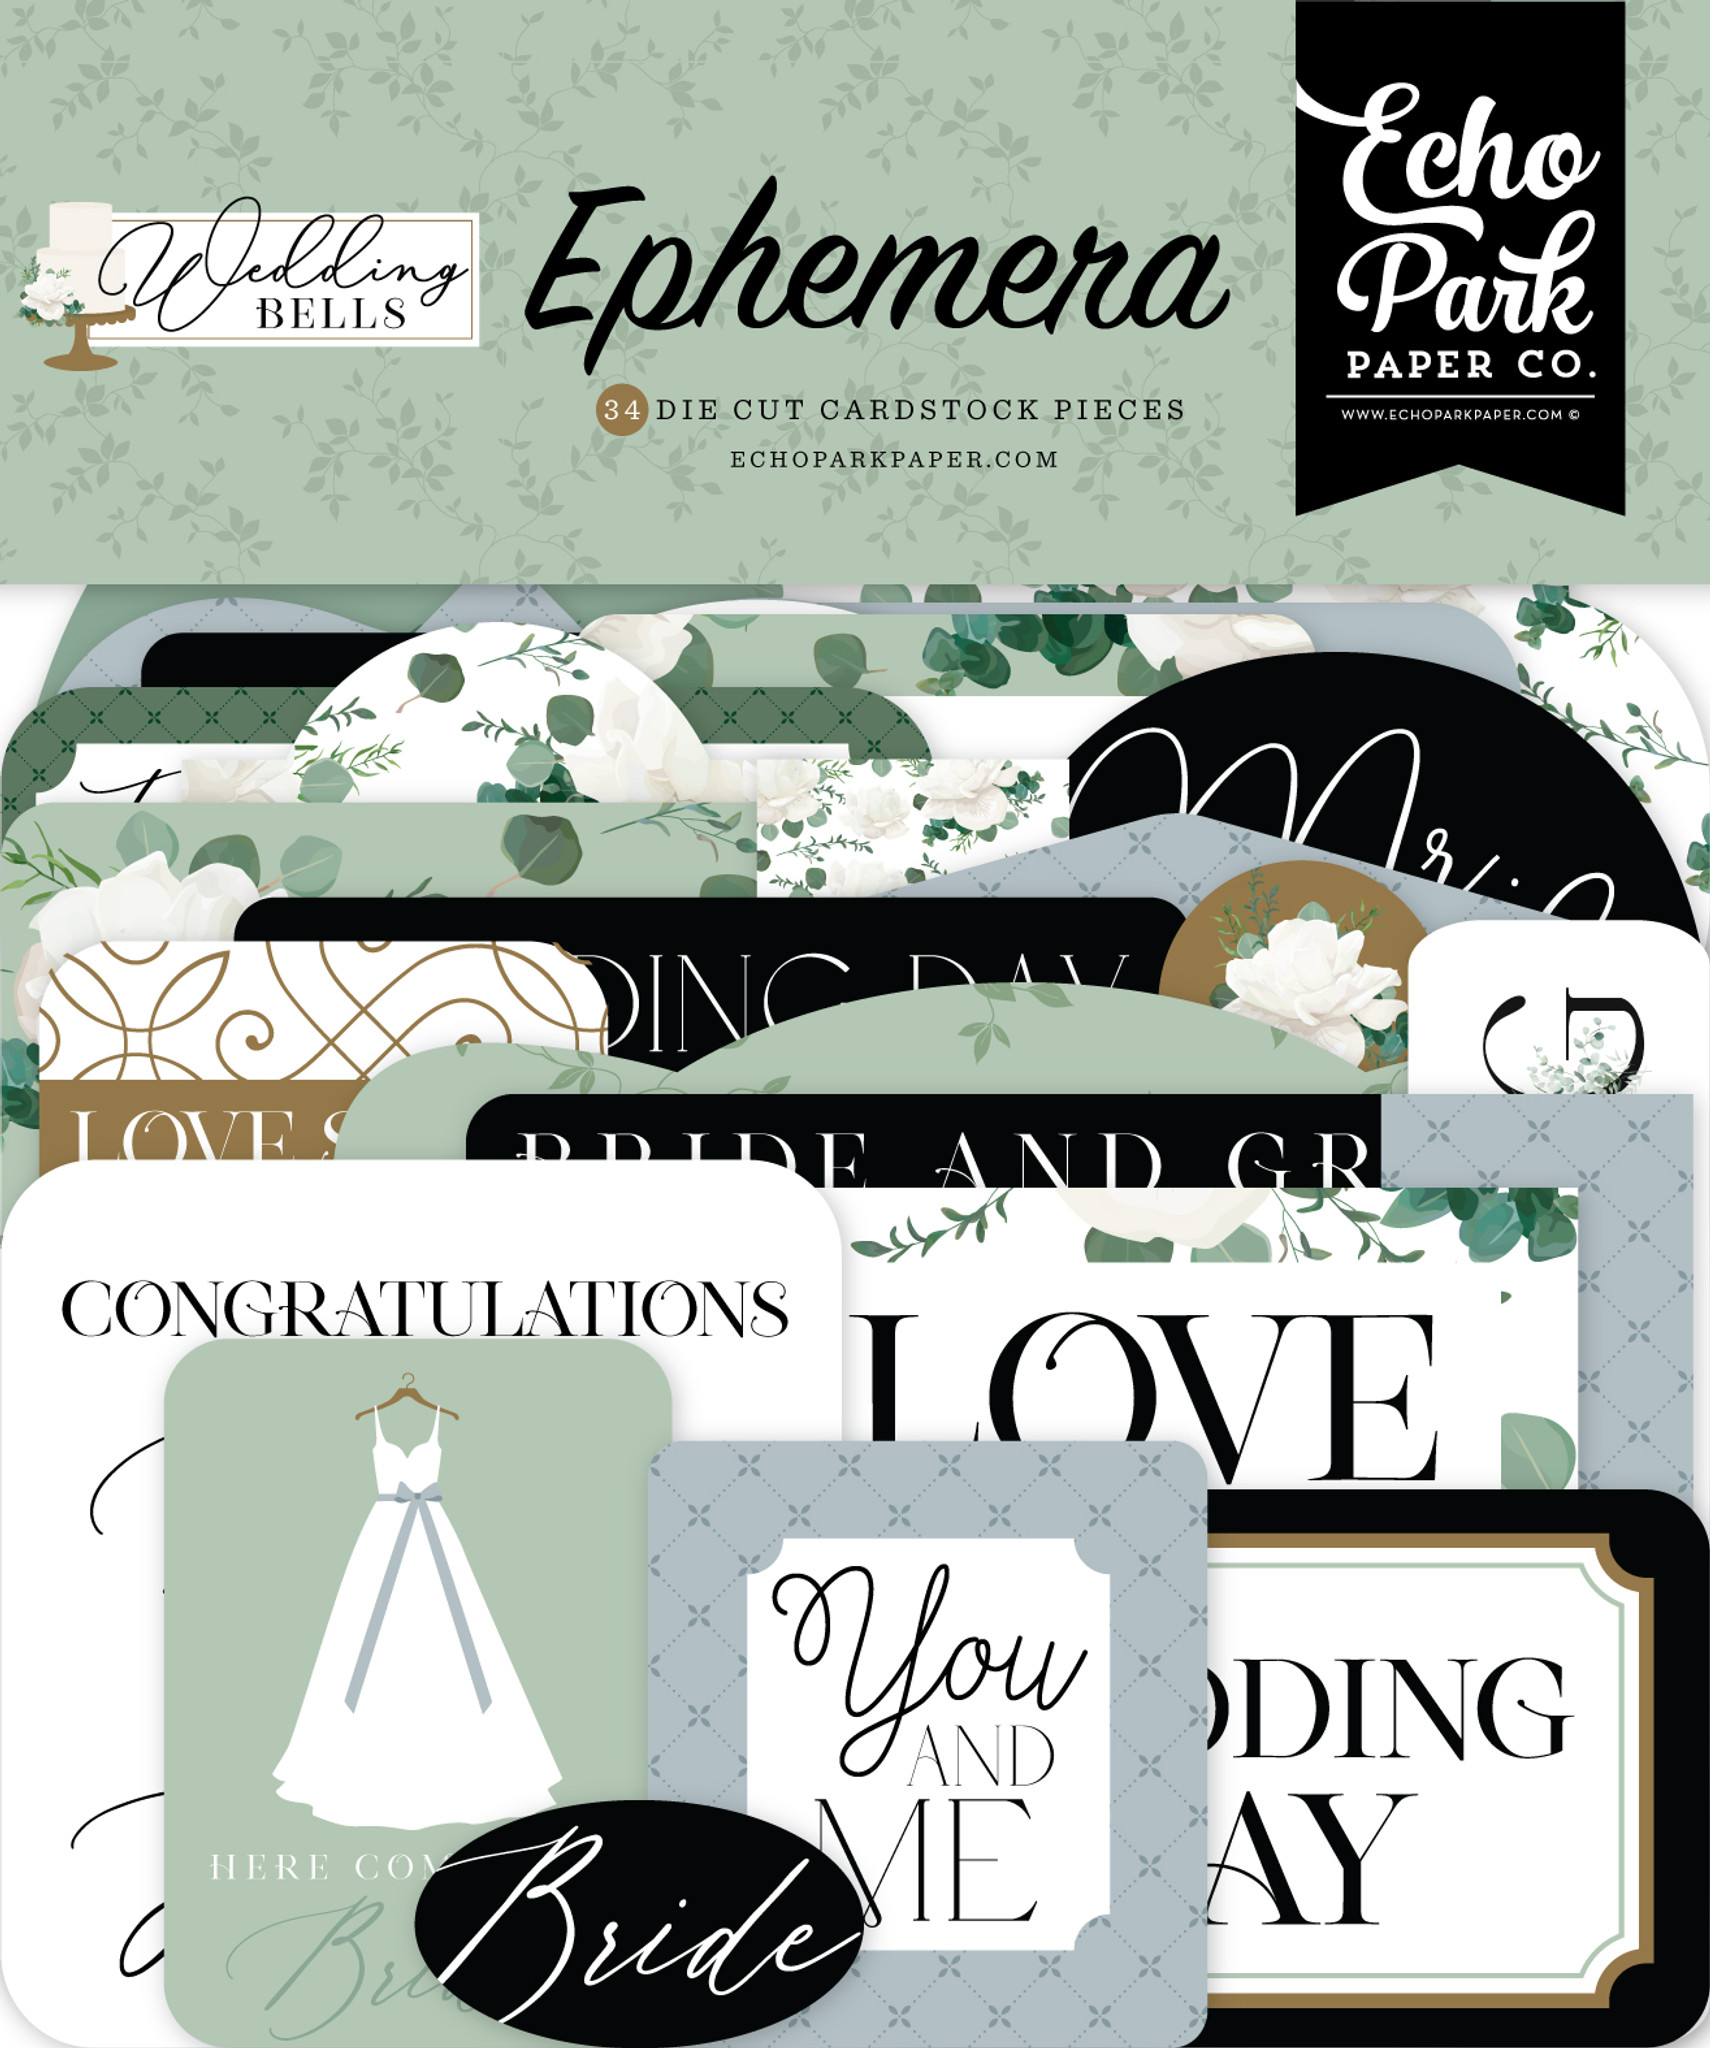 Wedding Bells Ephemera - Echo Park Paper Co.